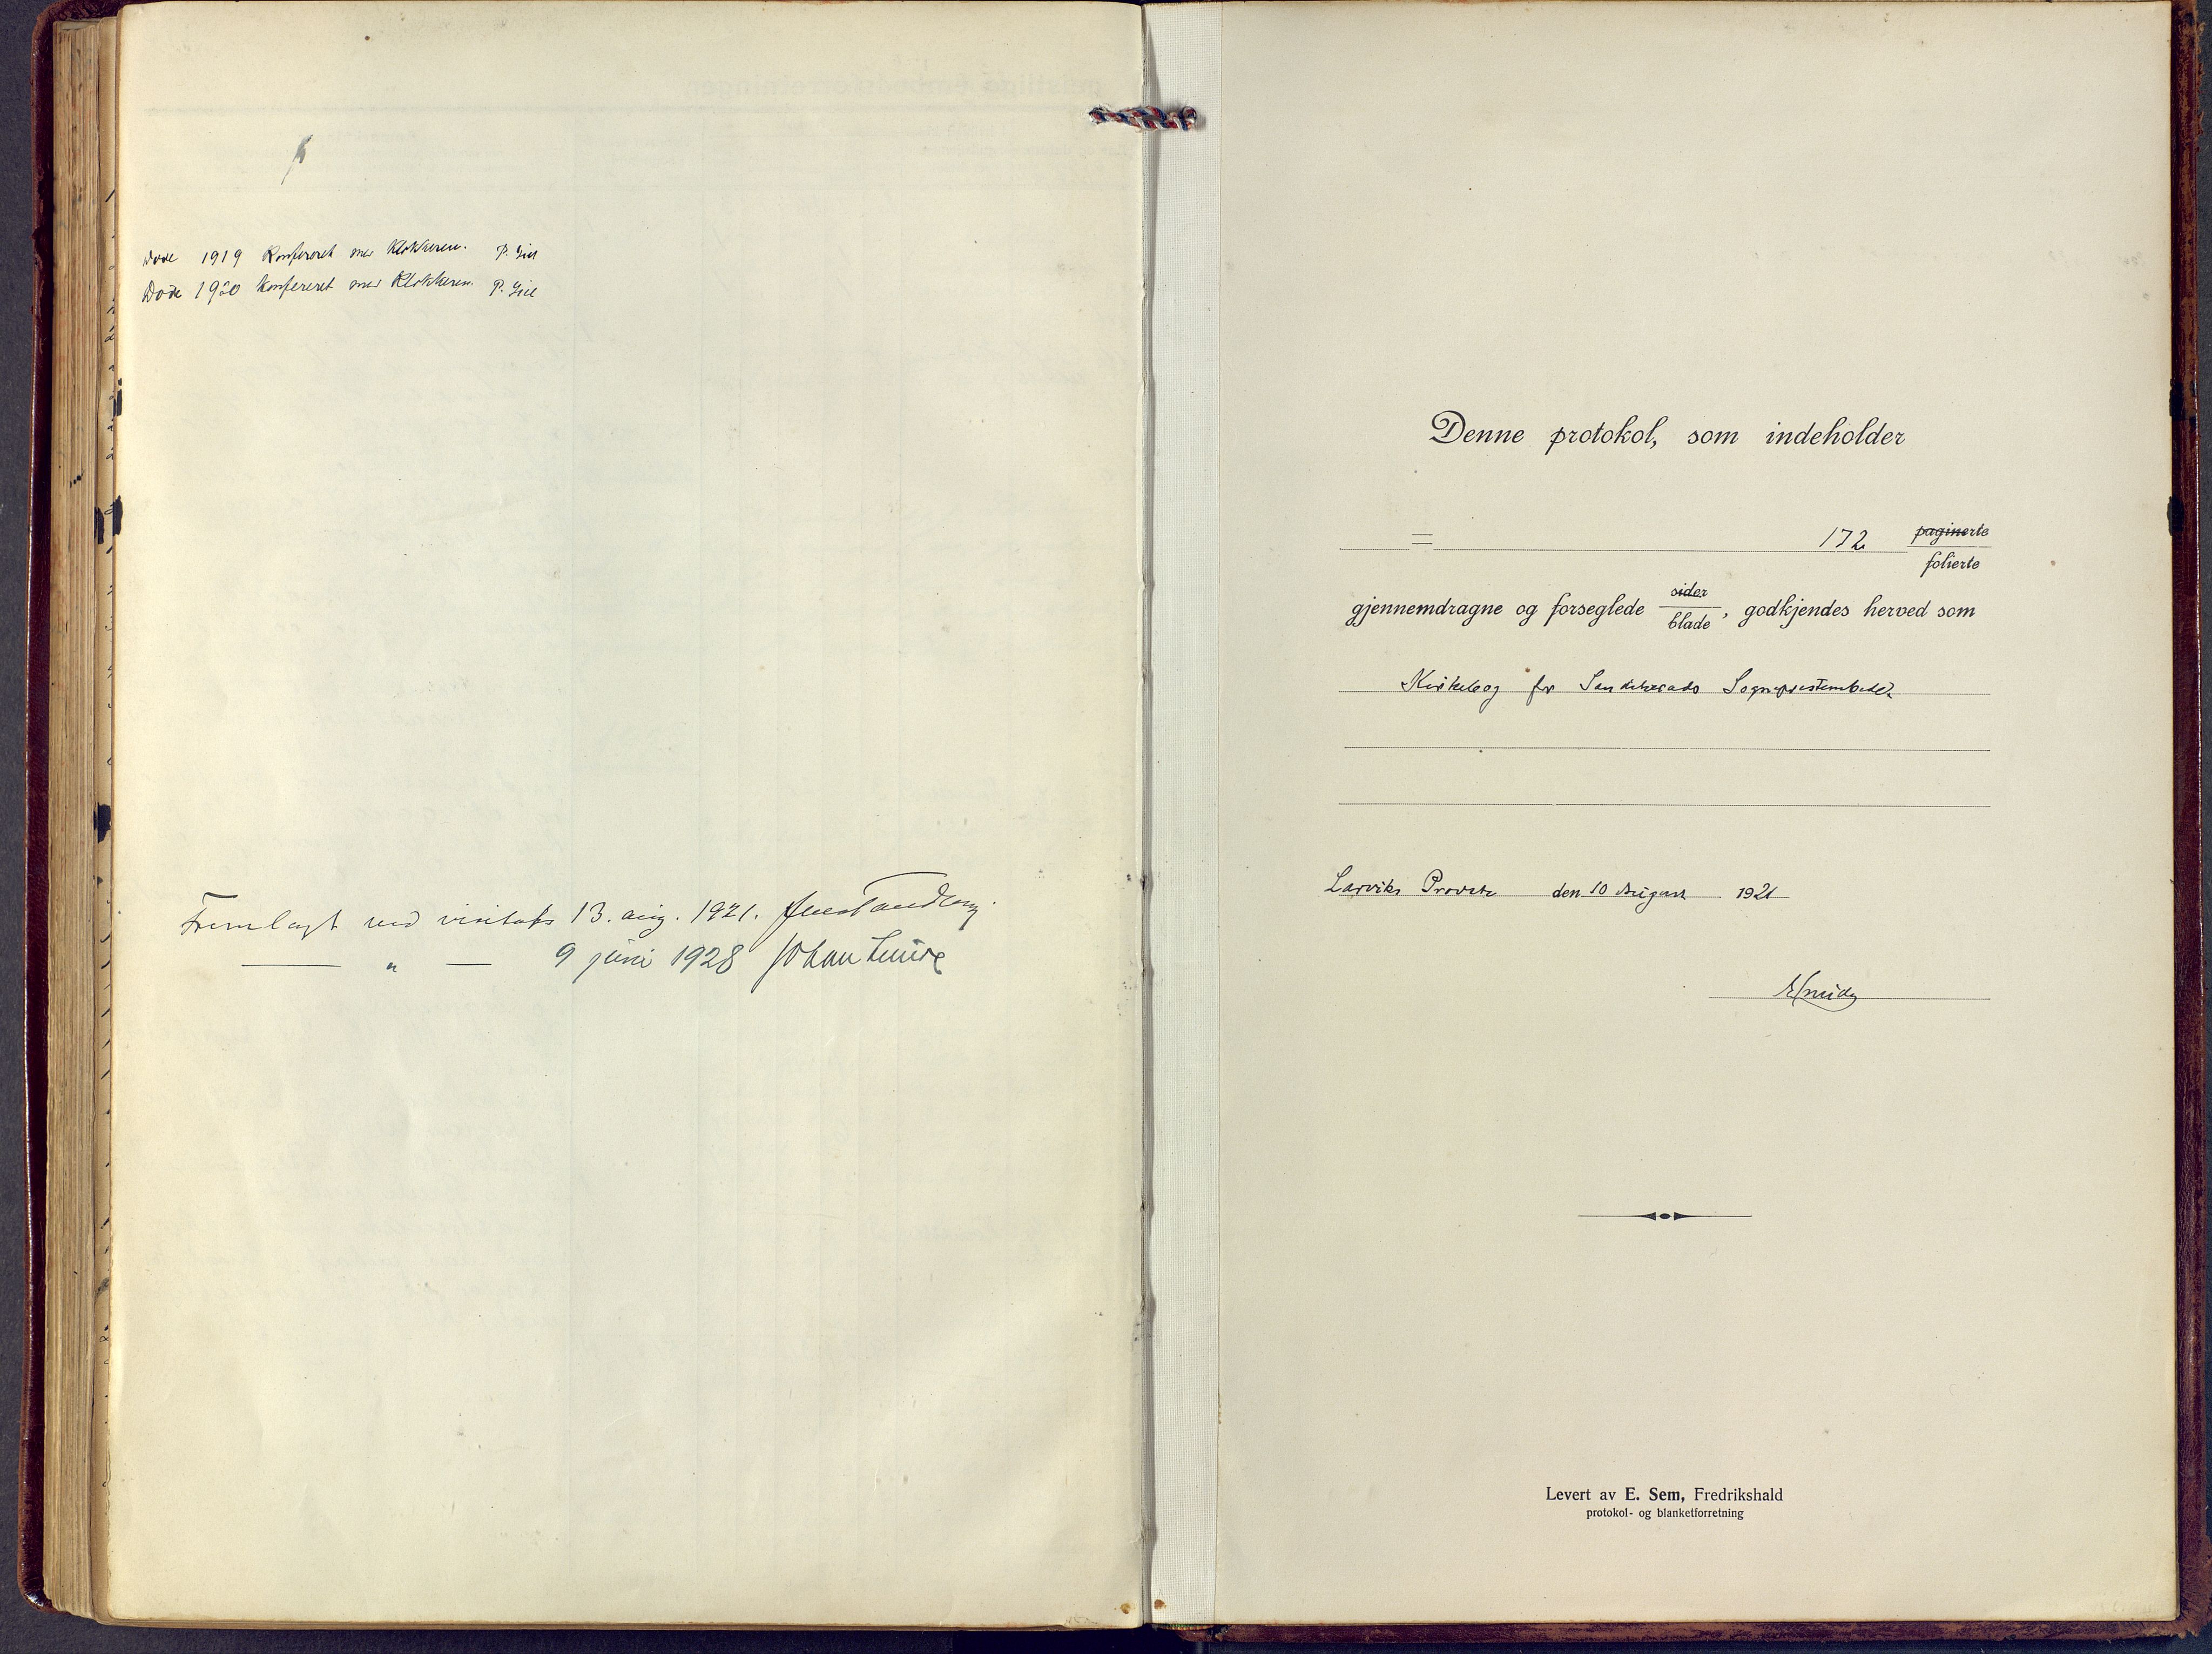 Sandar kirkebøker, SAKO/A-243/F/Fa/L0021: Ministerialbok nr. 21, 1919-1925